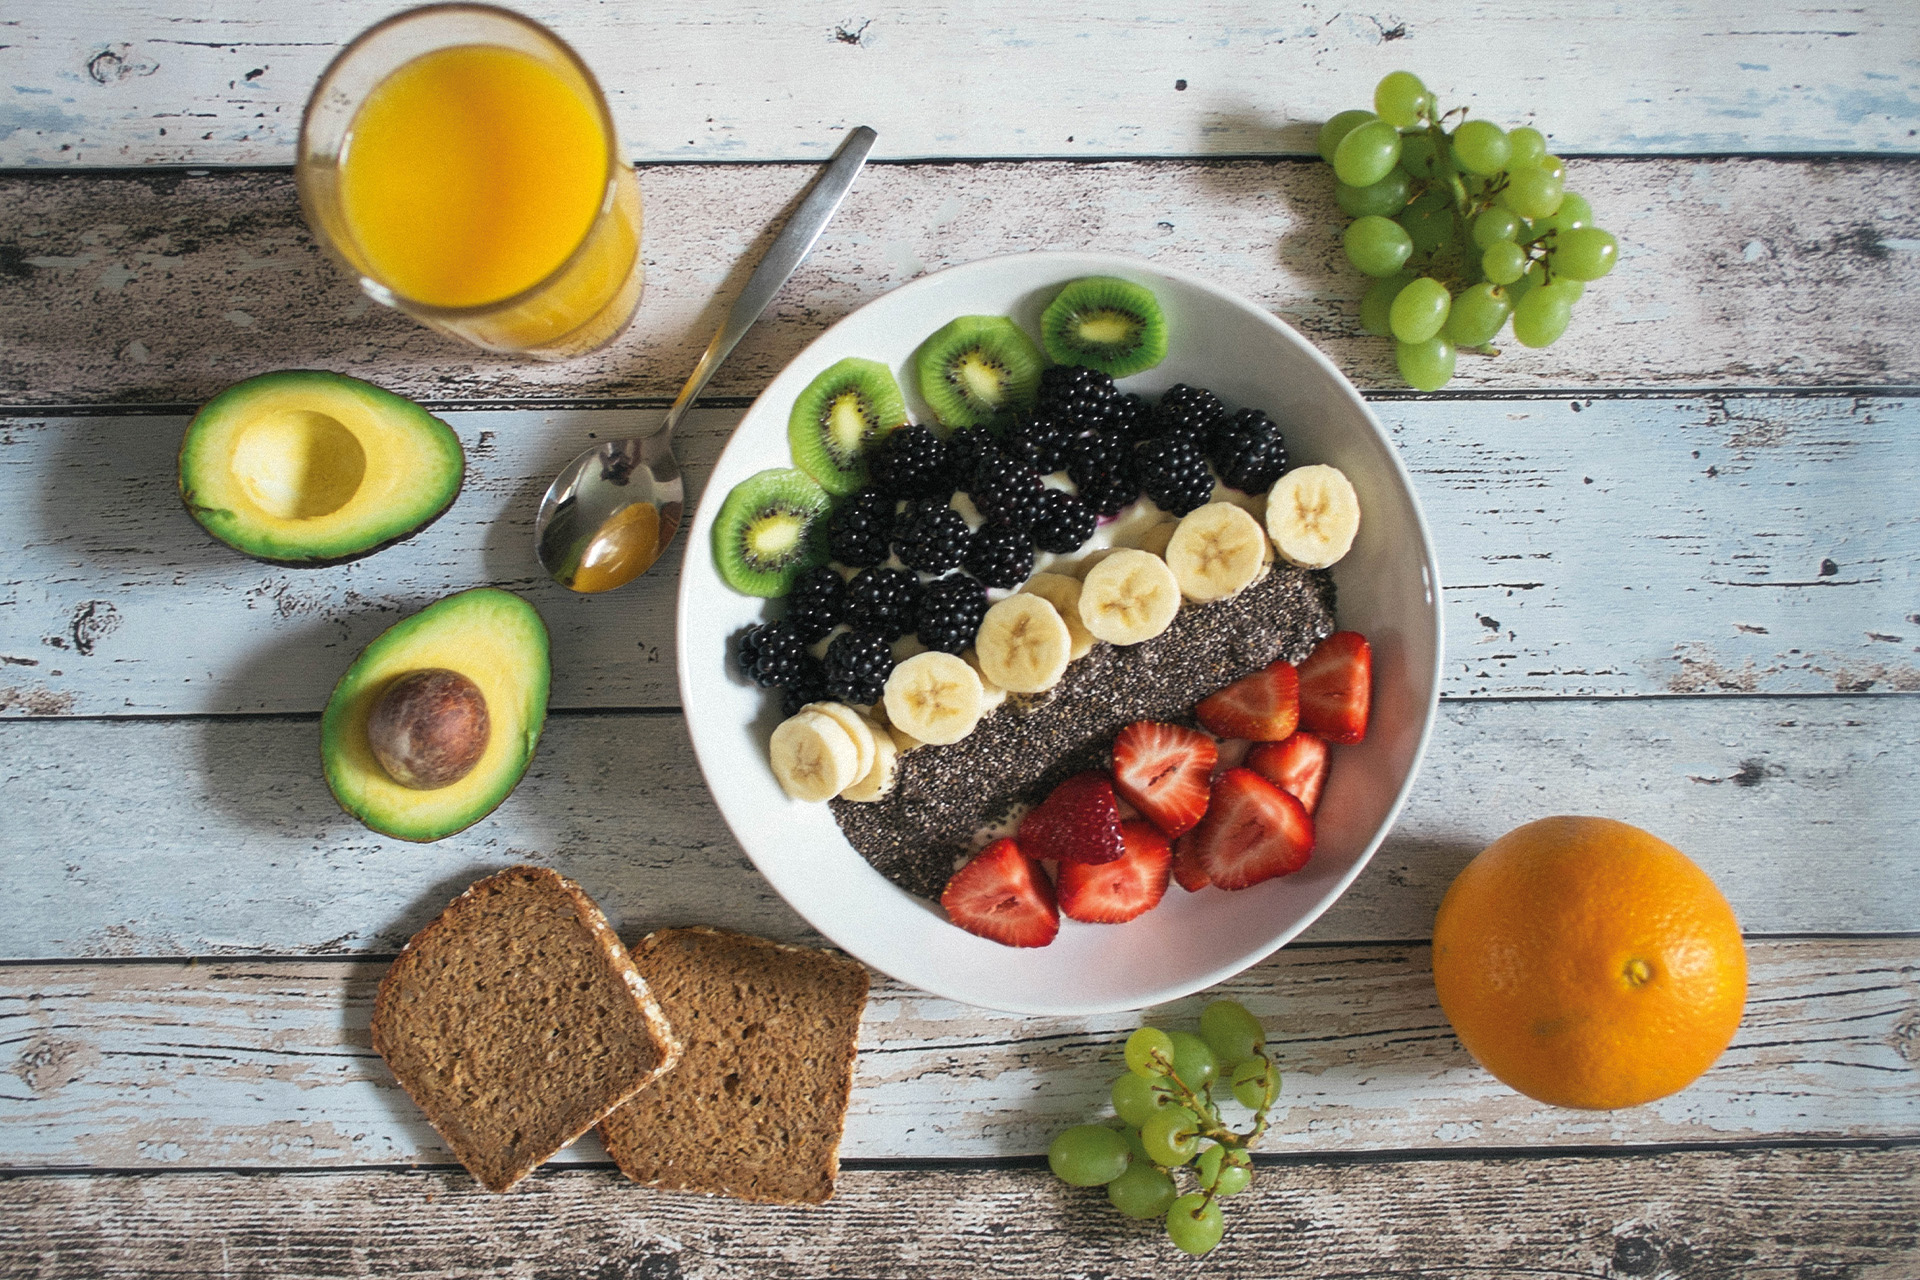 Healthy Breakfast (Image: Unsplash)